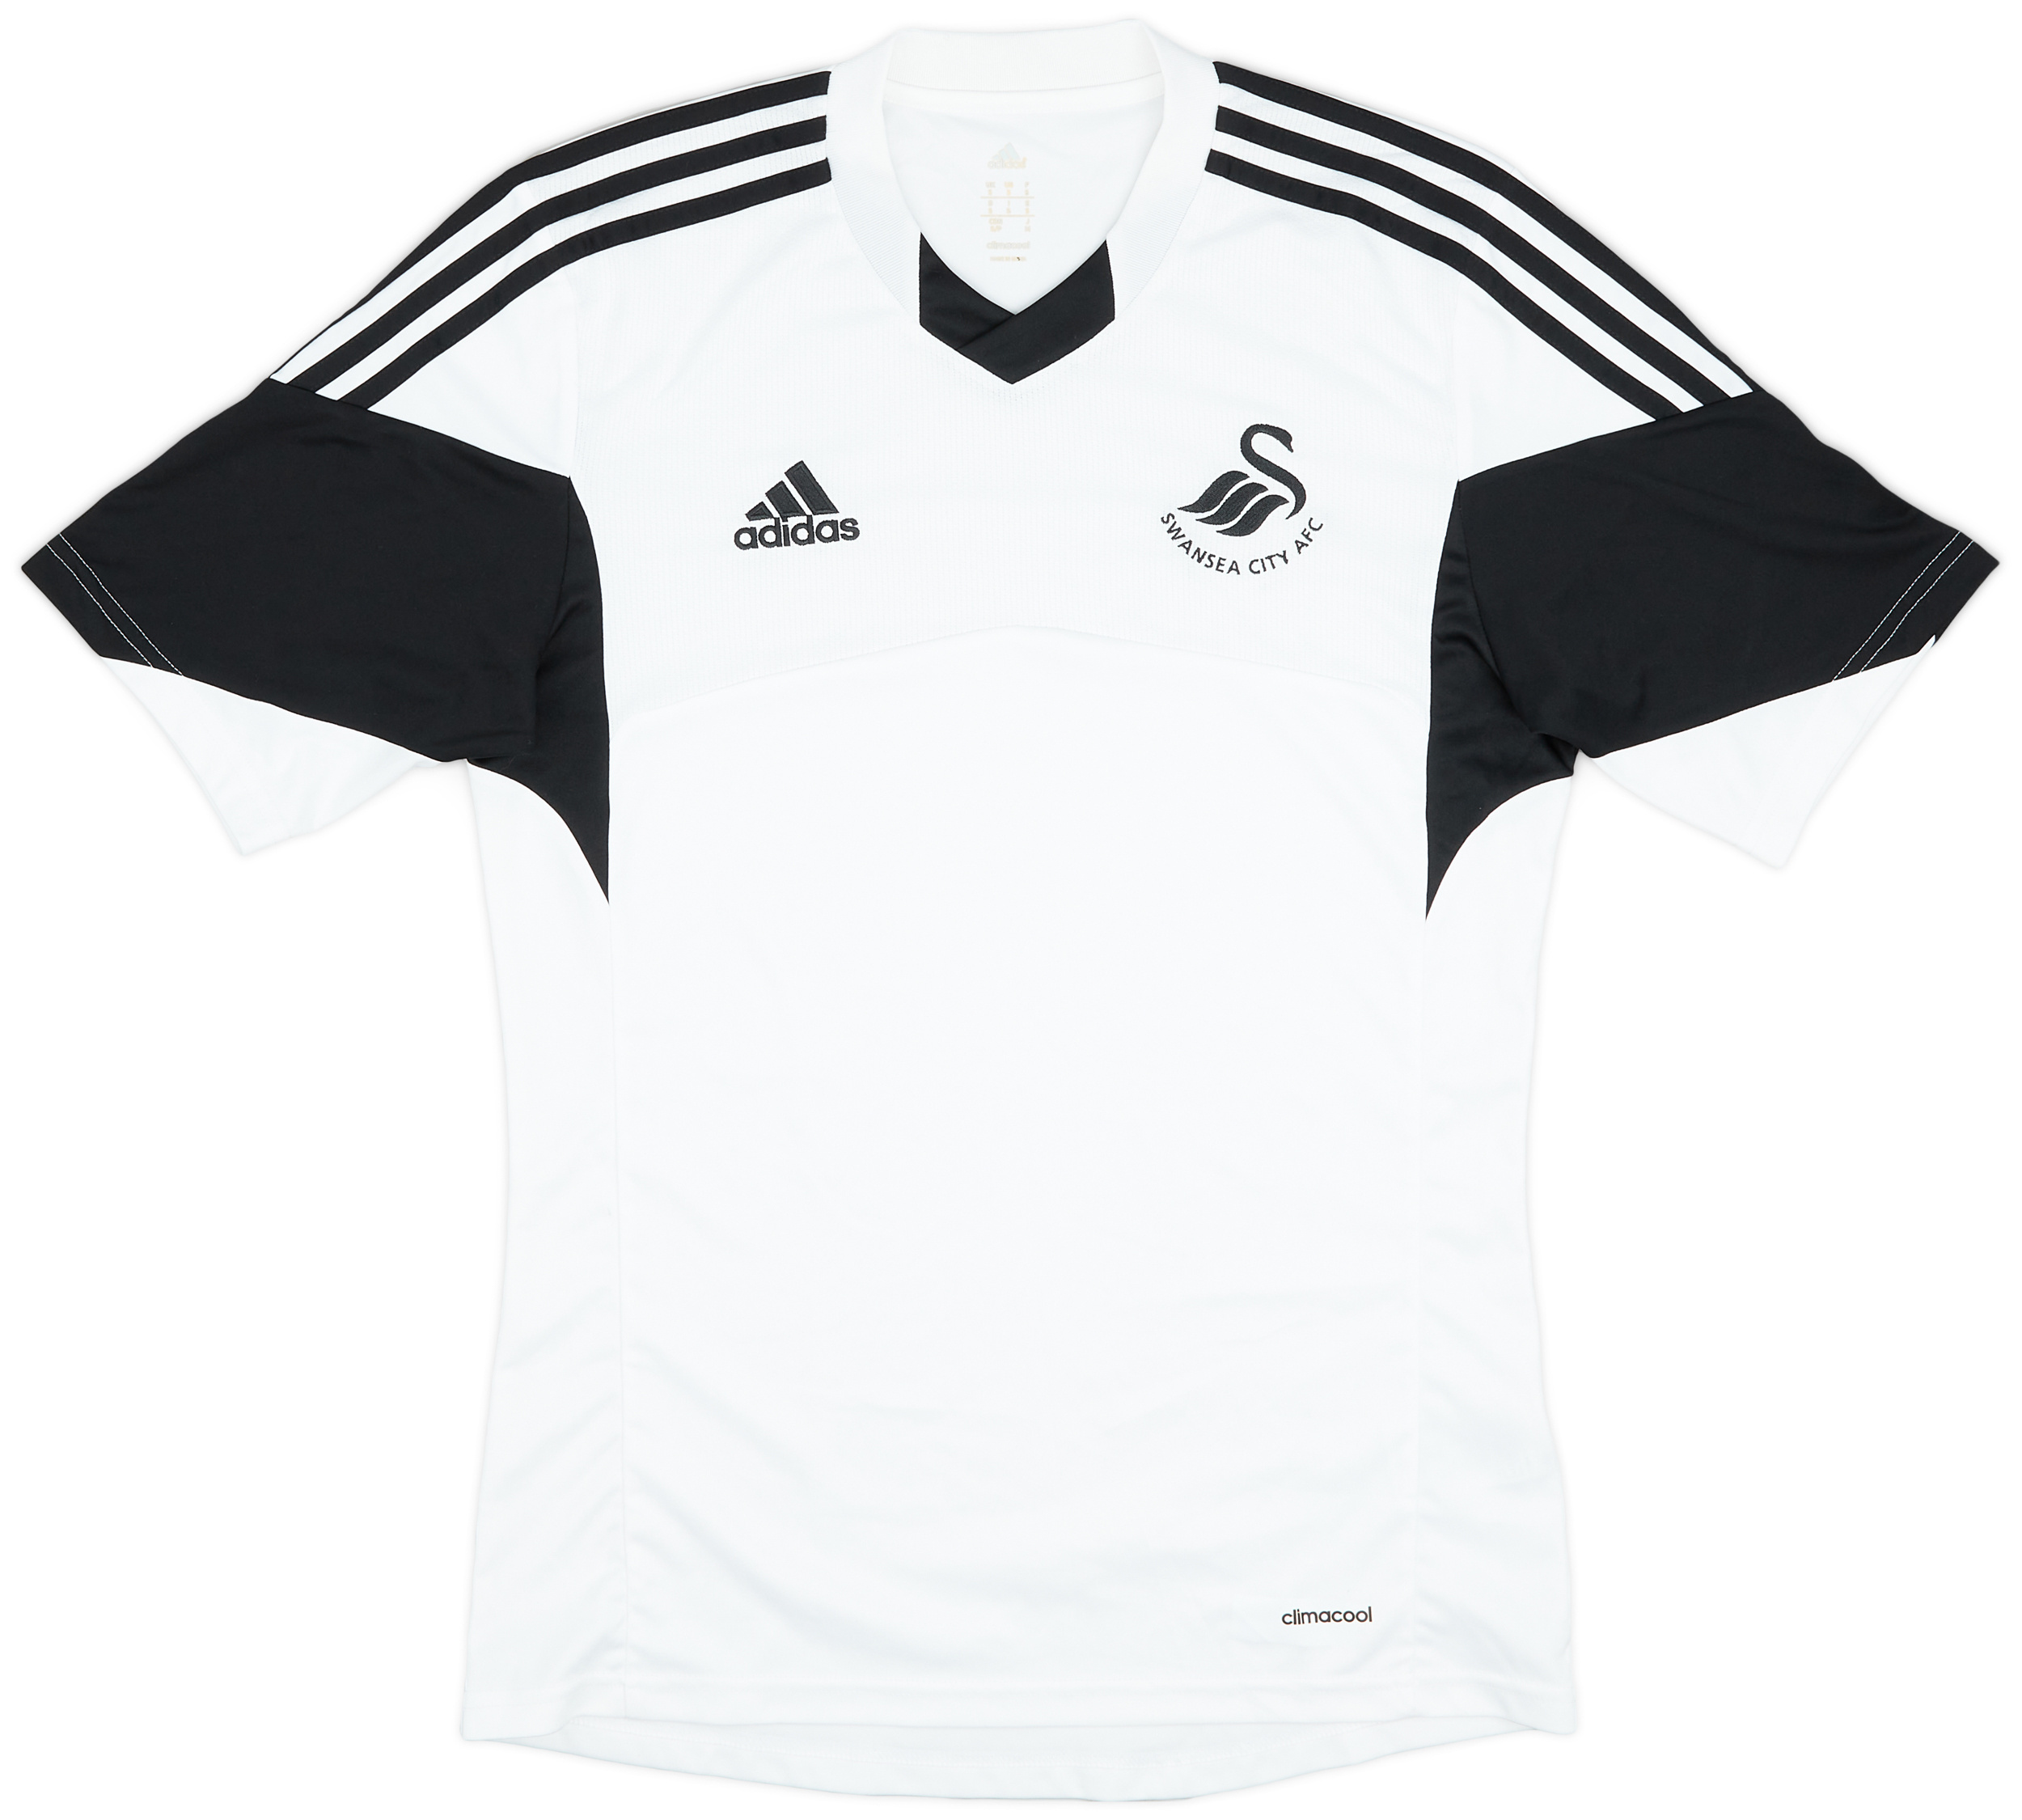 2013-14 Swansea City Home Shirt - 8/10 - ()